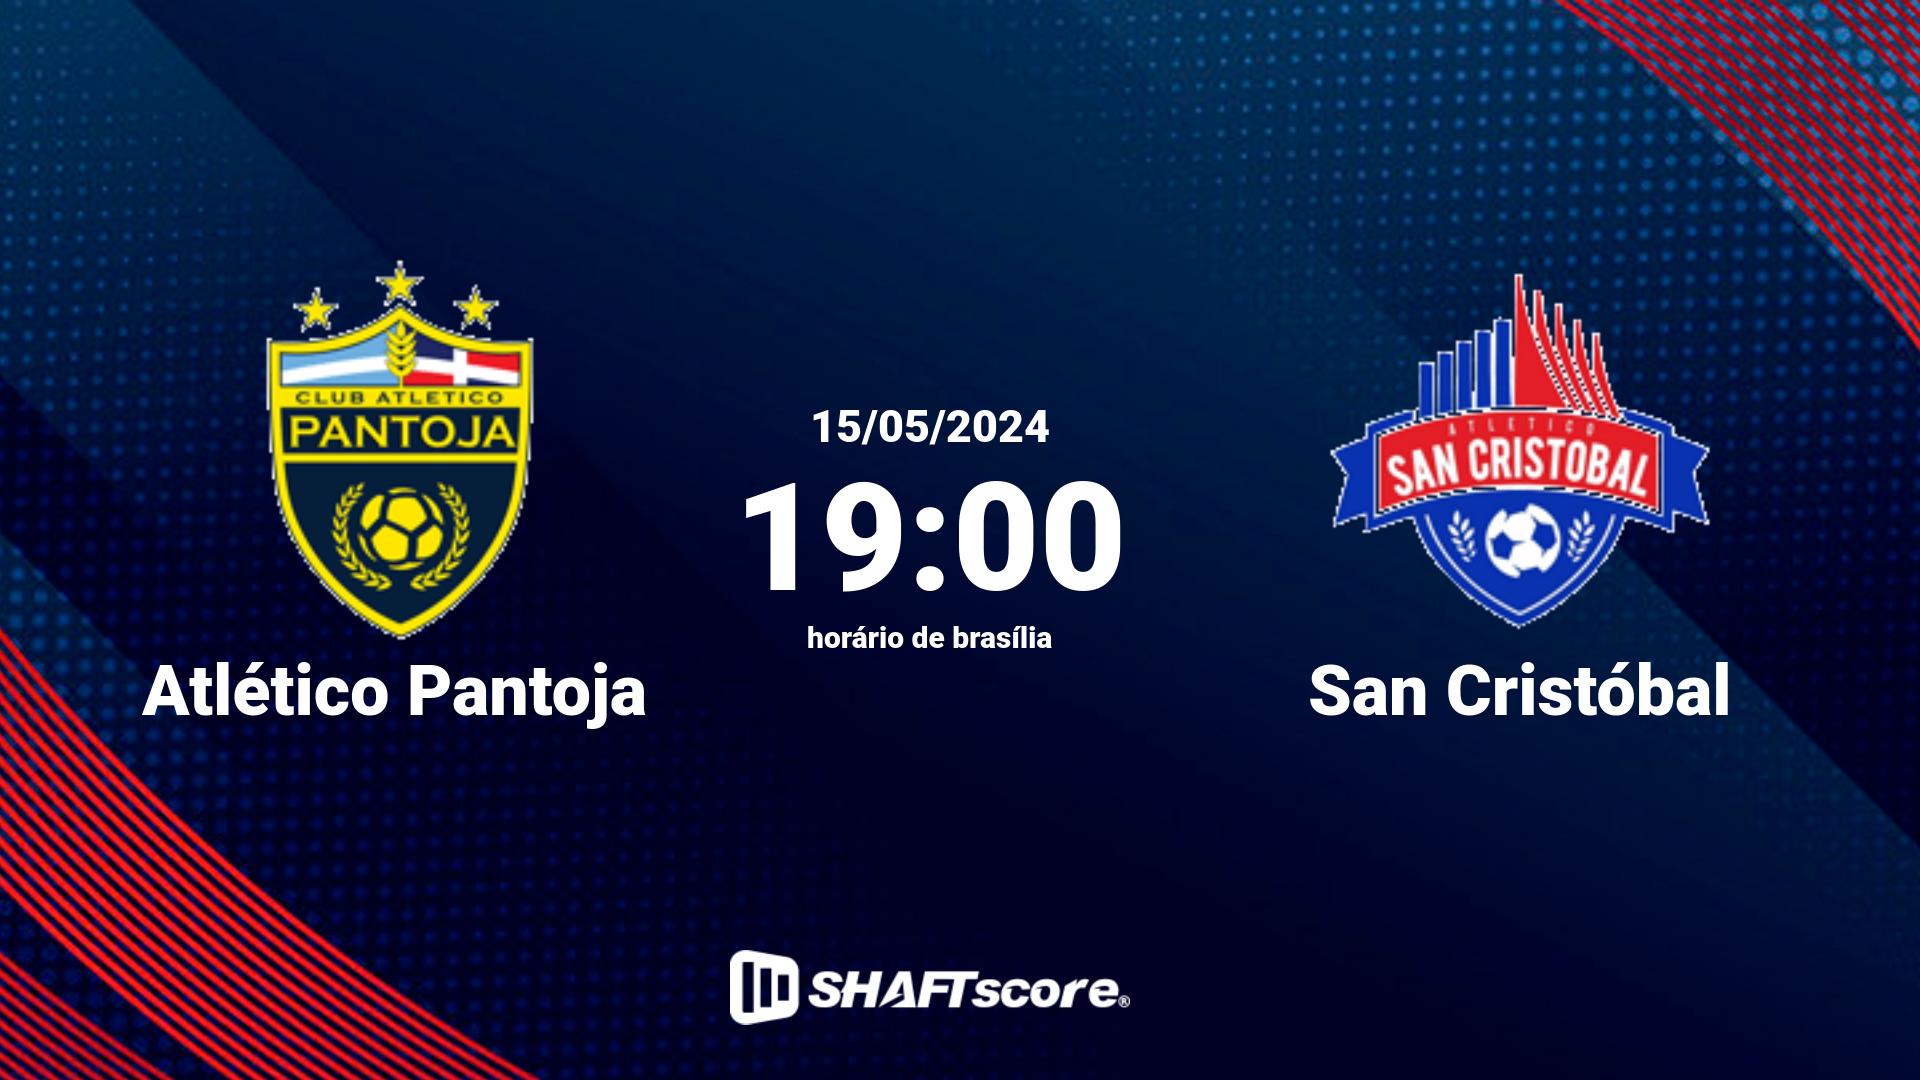 Estatísticas do jogo Atlético Pantoja vs San Cristóbal 15.05 19:00